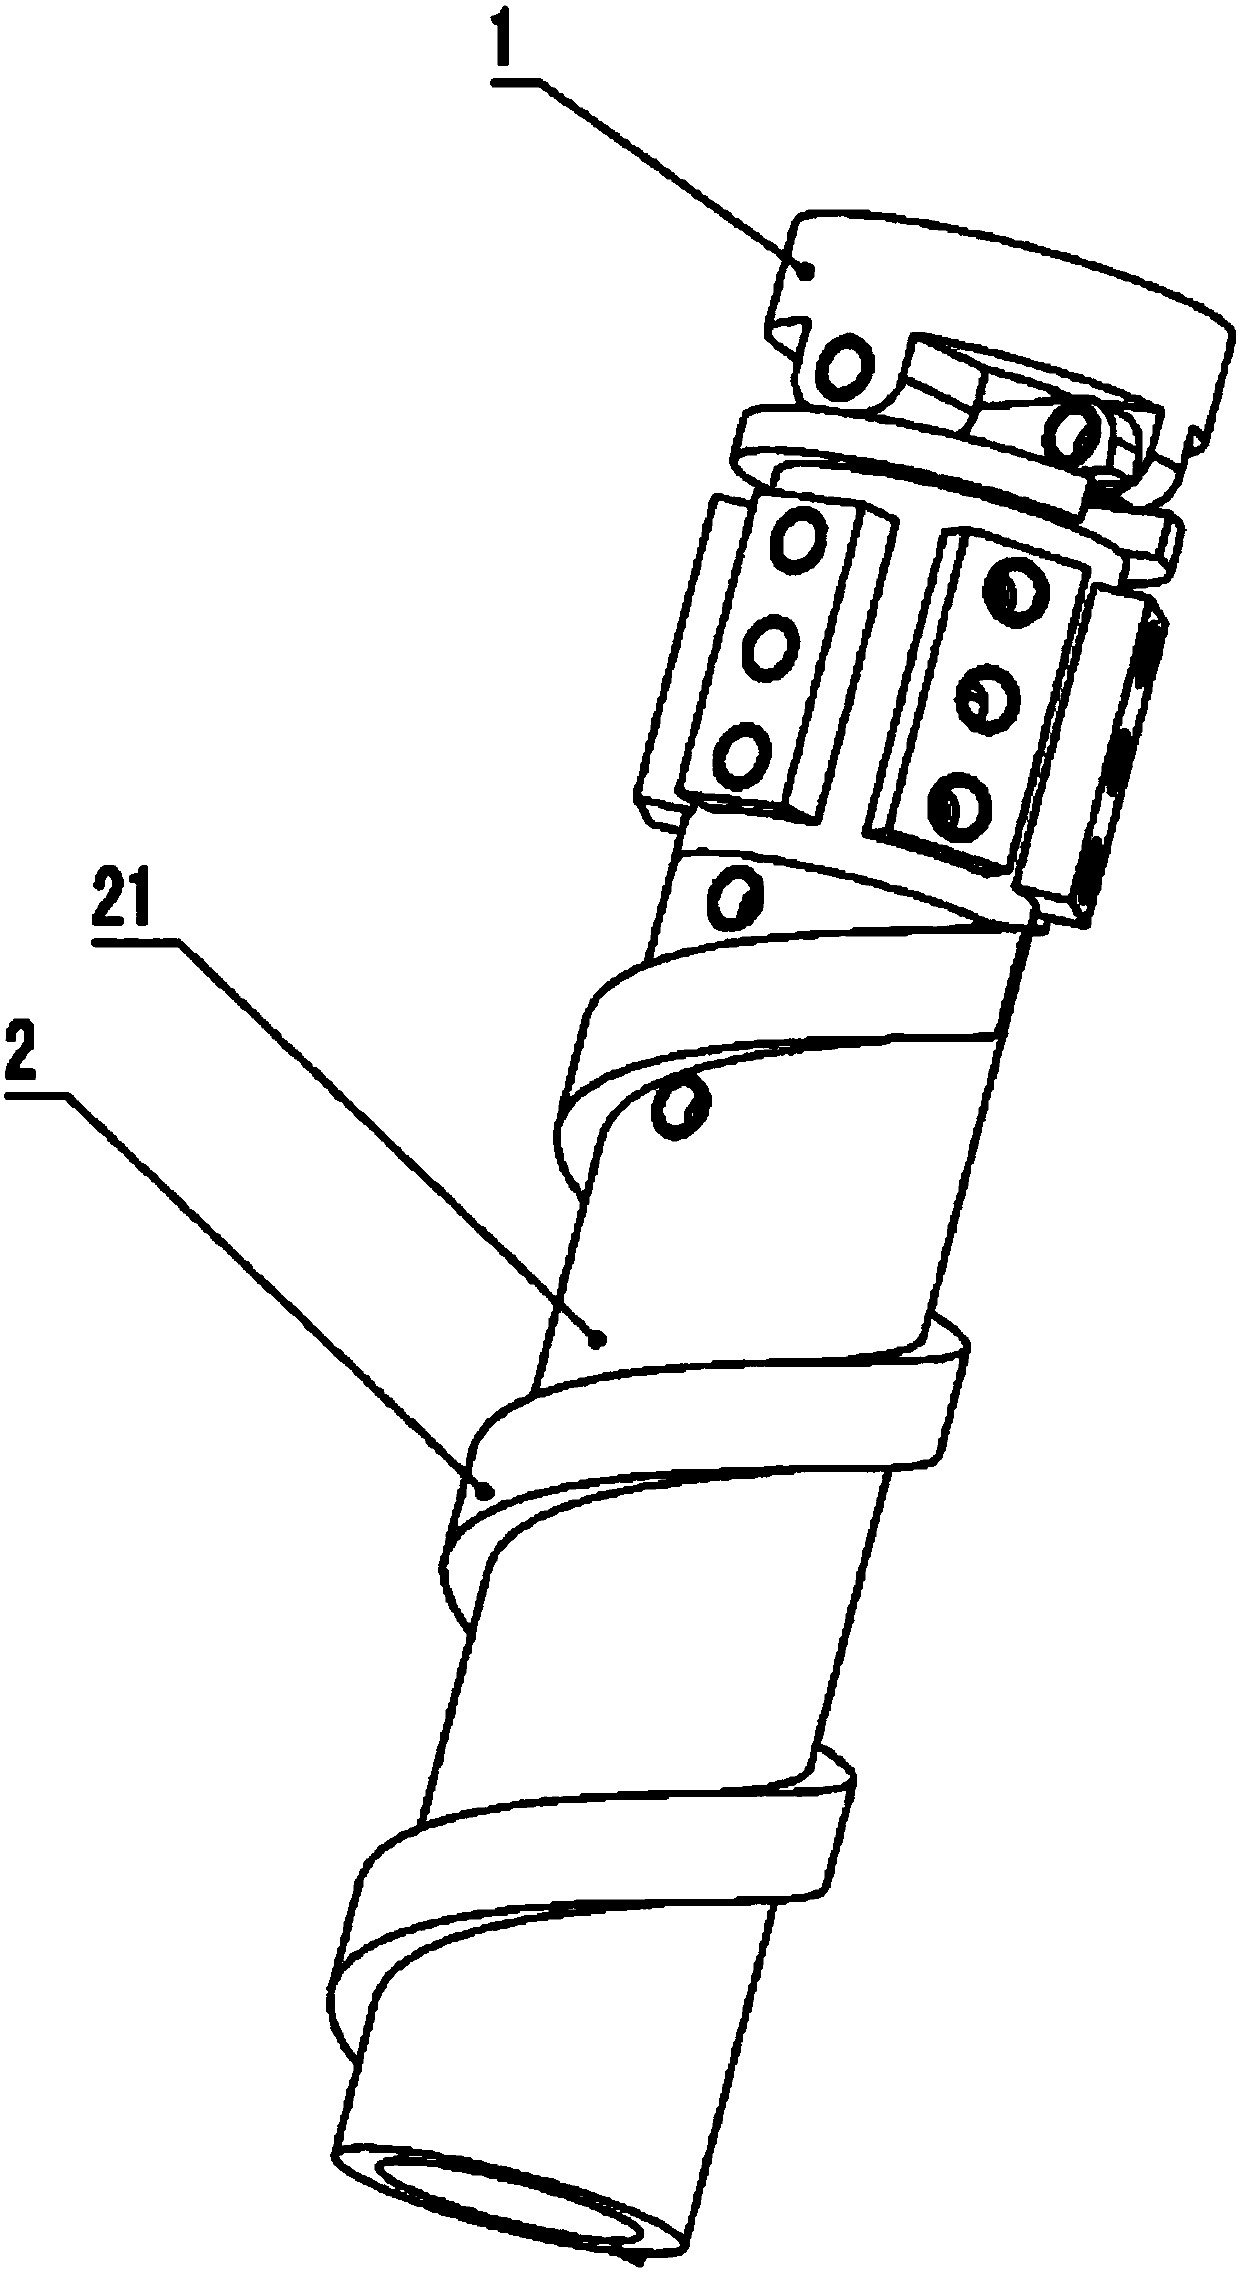 Endoscope micro-capsule robot